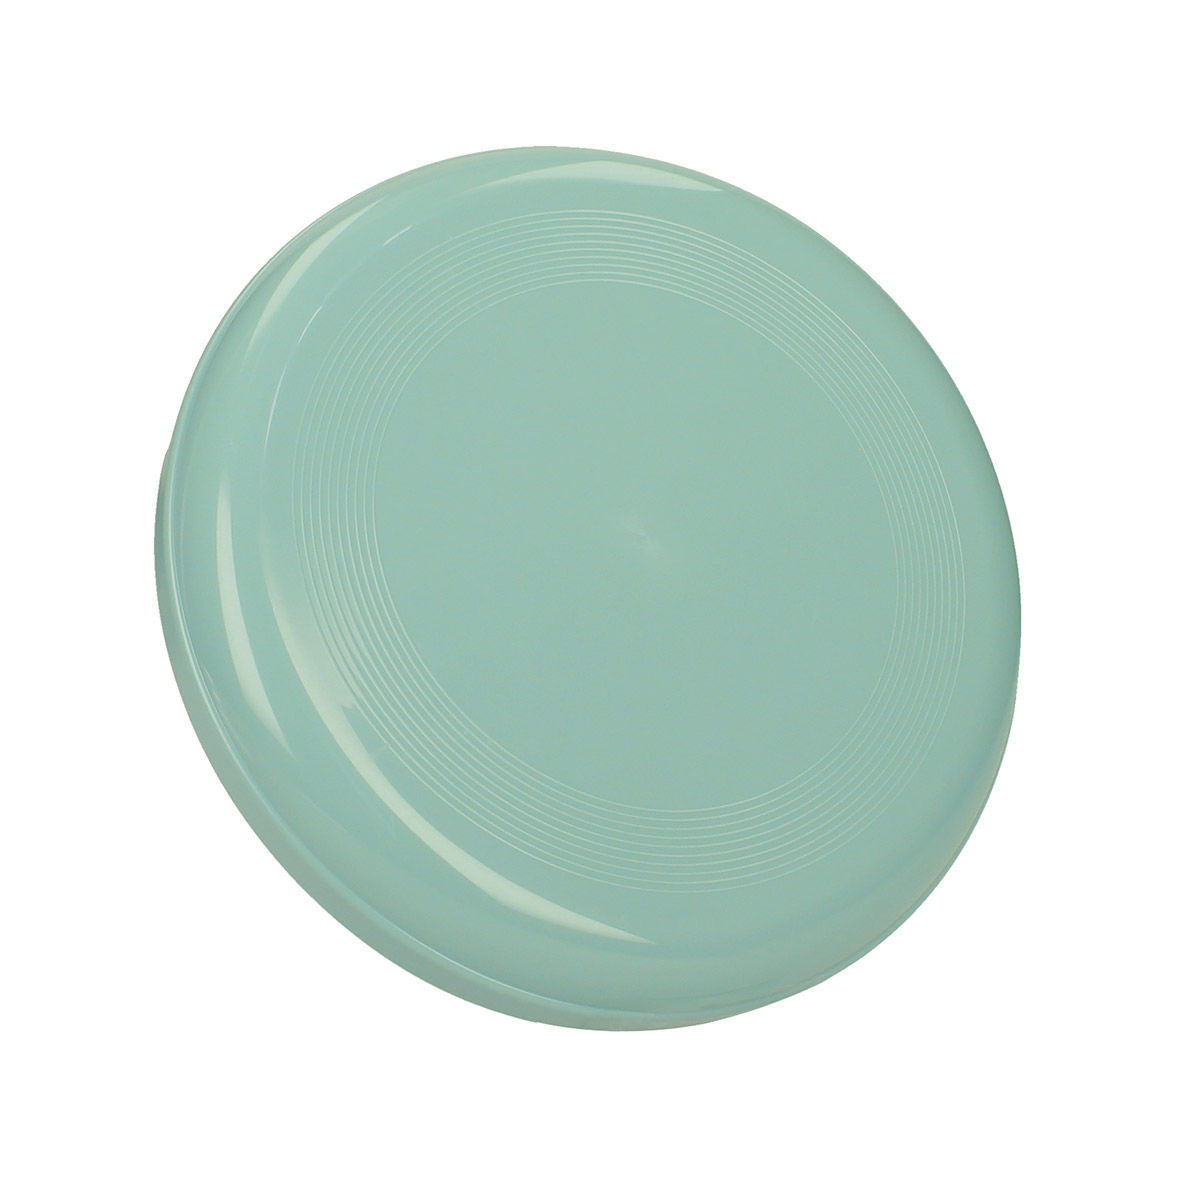 Mint Bioplastic Eco Frisbee